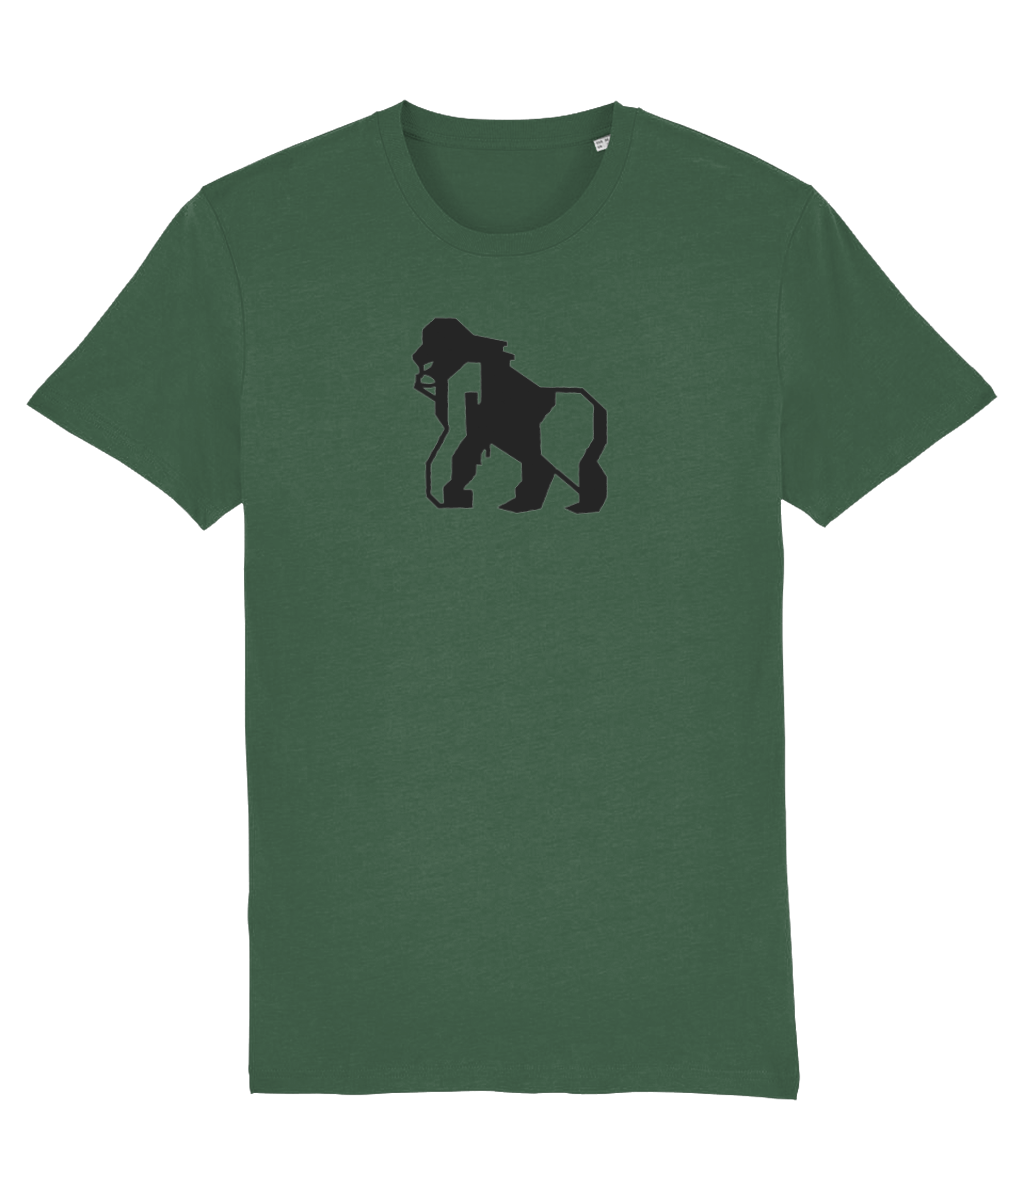 Bottle Green Gorilla/Gayrilla Organic Cotton T-Shirt